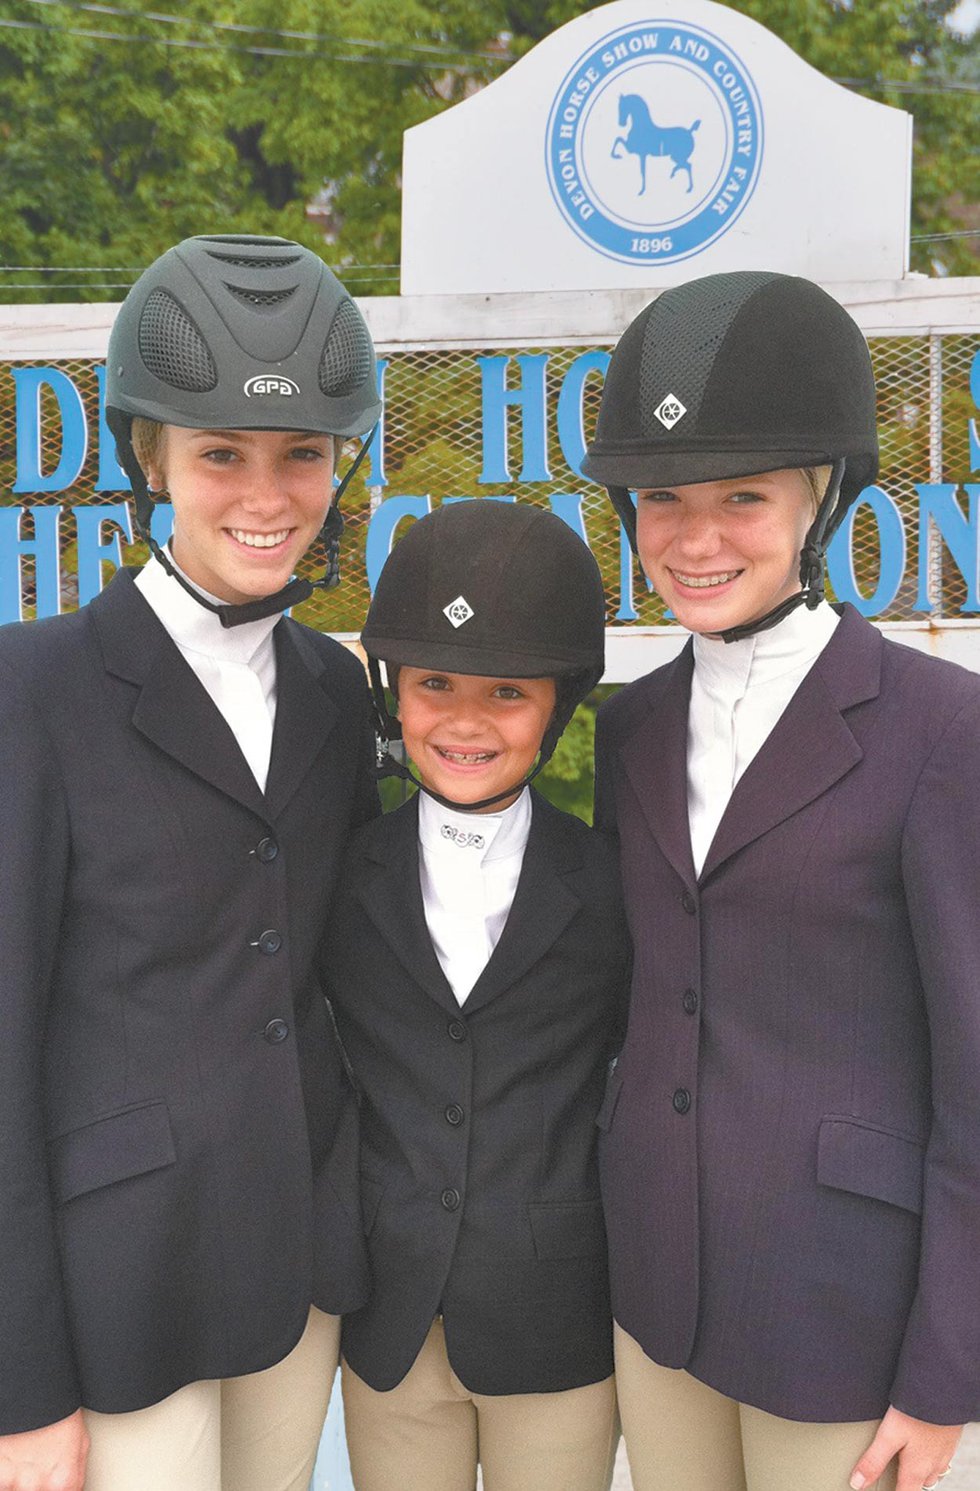 Mountain Brook girls compete in prestigious horse show